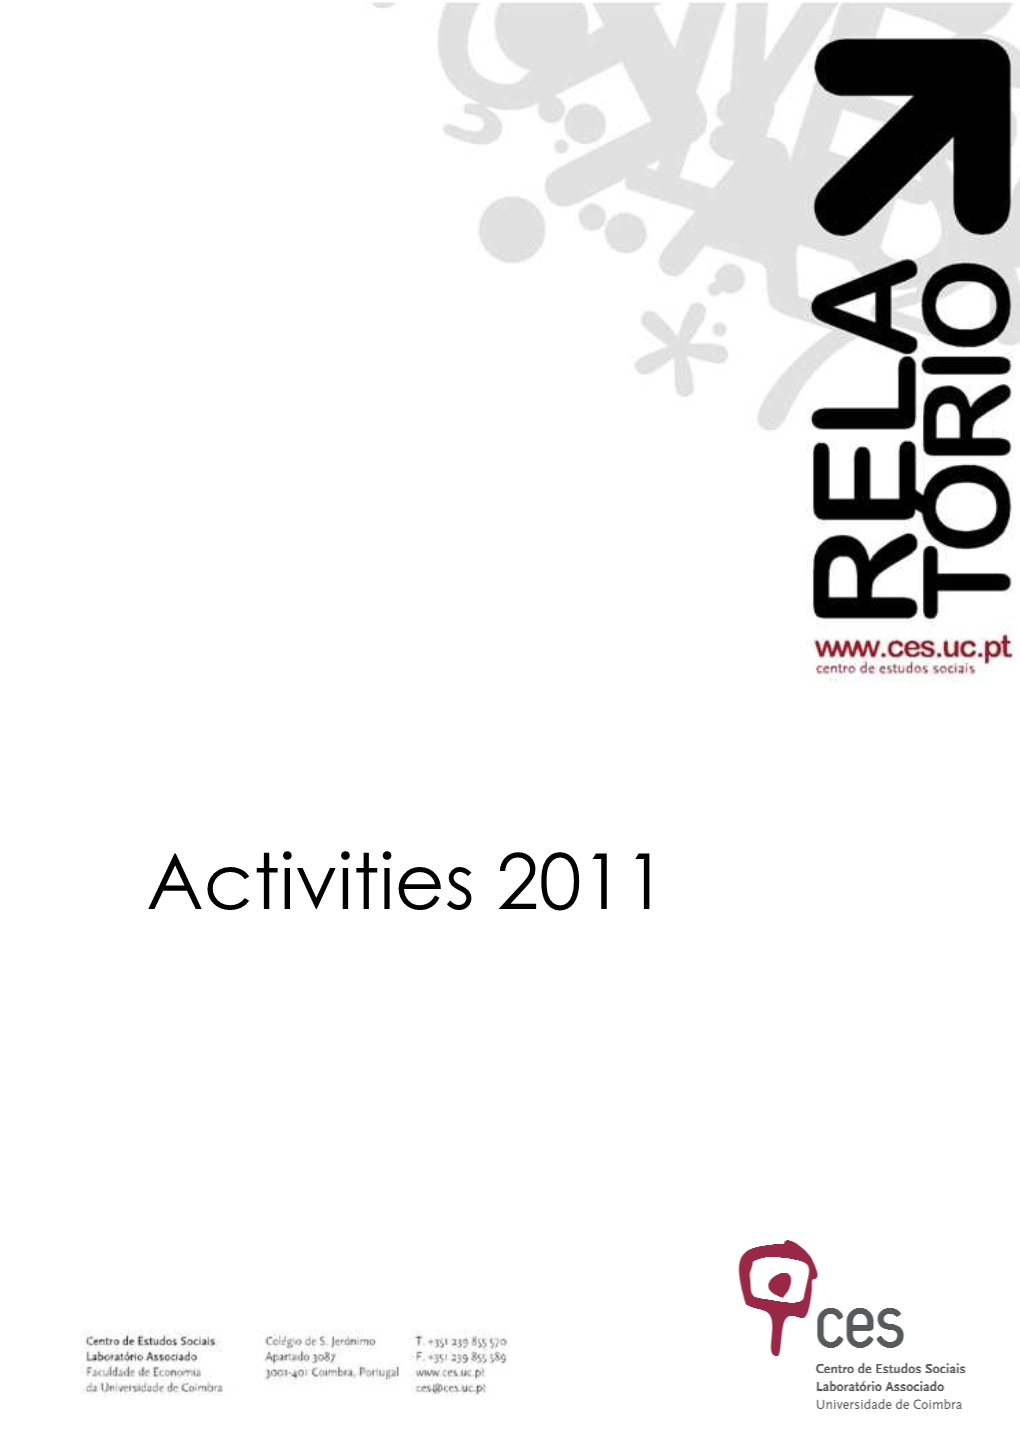 Activity Report 2011